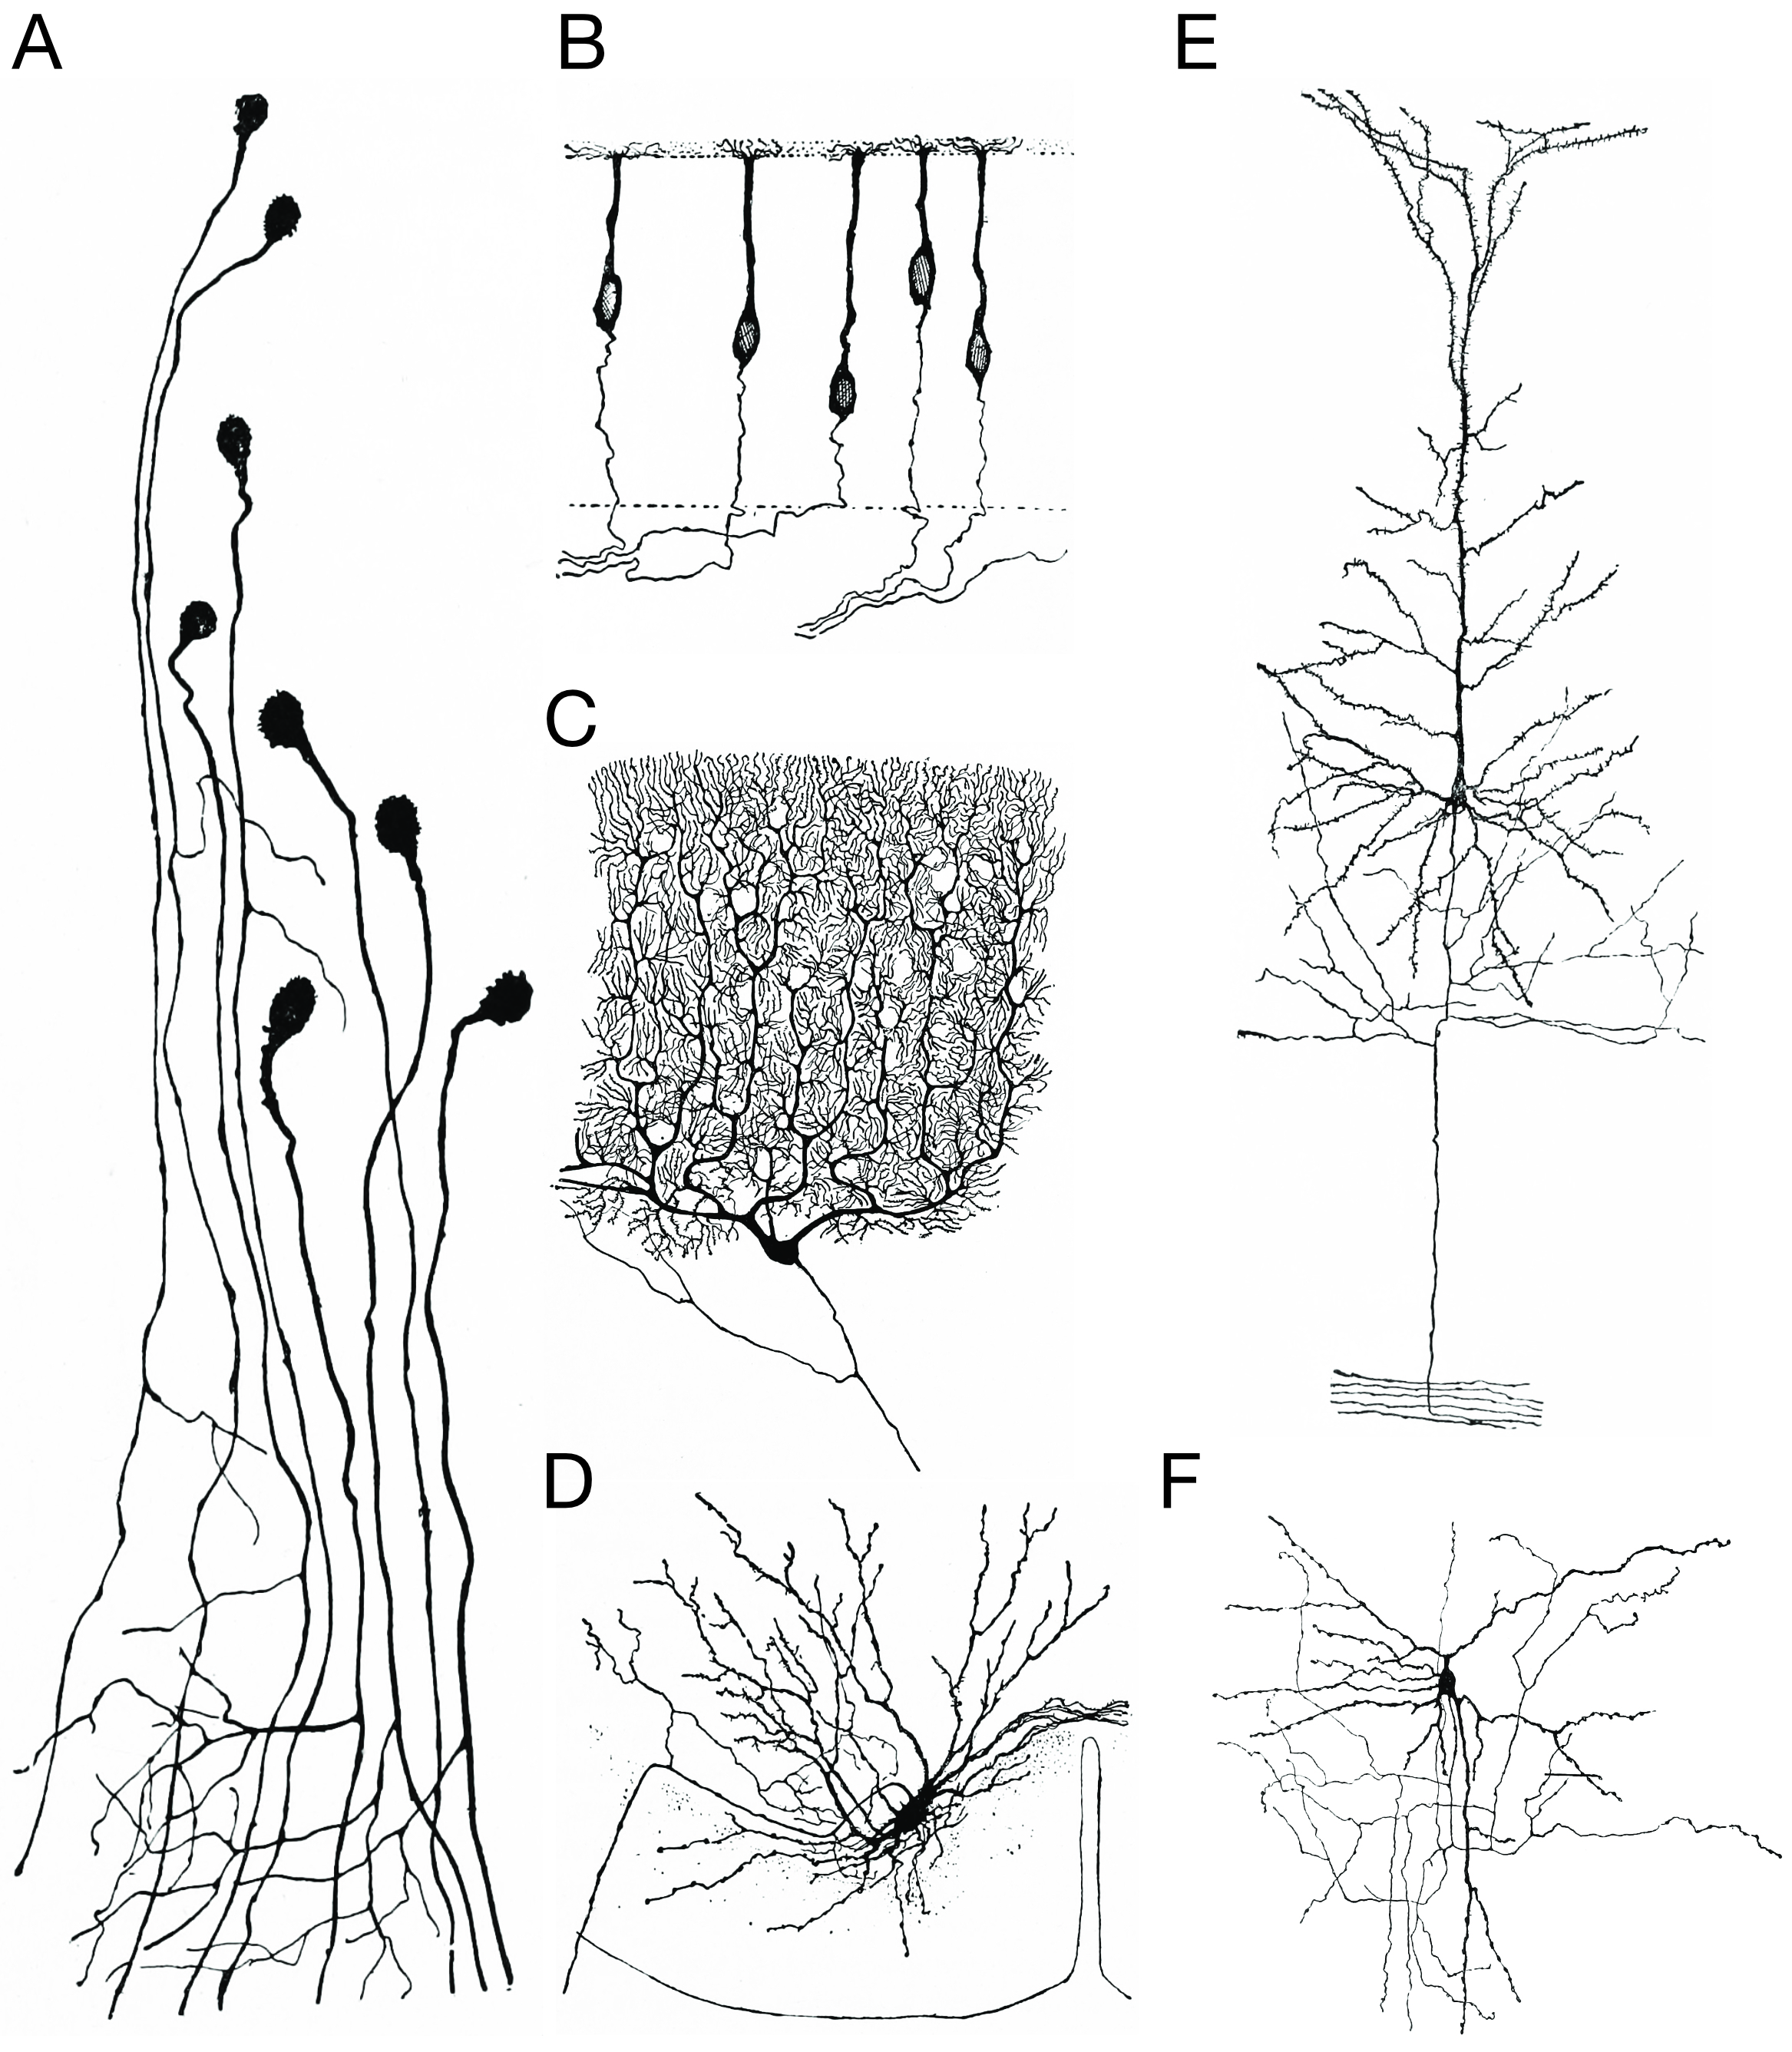 Morpholoigcally distinct types of neurons after Cajal. A) Unipolar neurons; B) bipolar neurons; Golgi I neurons: C) a Purkinje cell; D) spinal motor neuron E) a pyramidal cell; F) Golgi II neuron. Histologie du système nerveux de l’homme & des vertébrés, Tome Premier (1909) by Santiago Ramón y Cajal translated from Spanish by Dr. L. Azoulay.